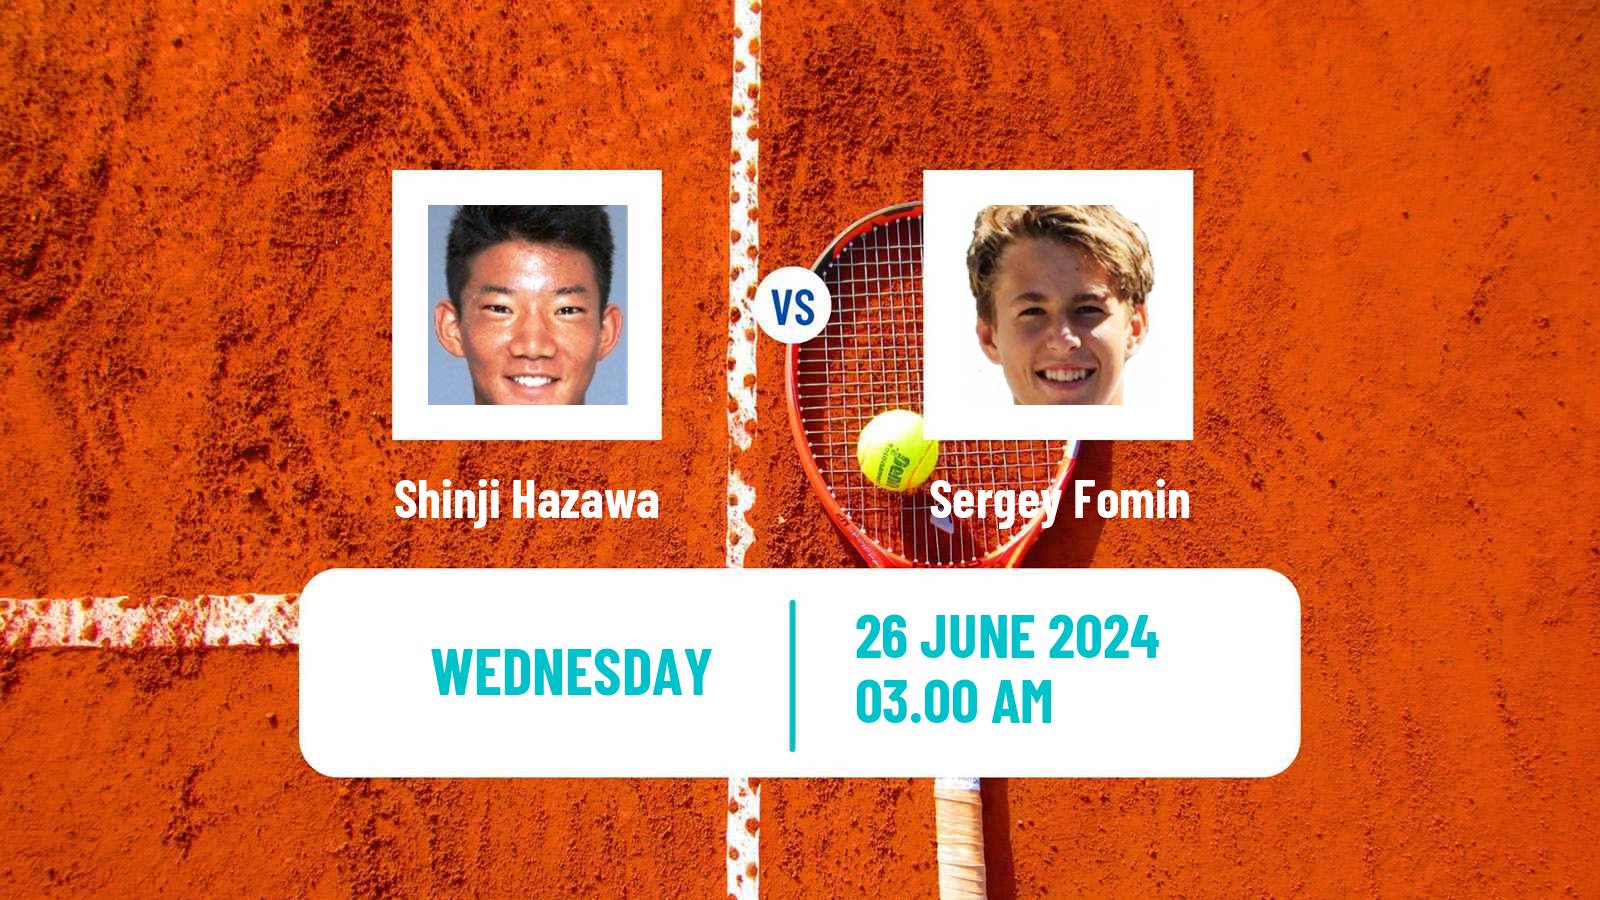 Tennis ITF M15 Ust Kamenogorsk Men Shinji Hazawa - Sergey Fomin